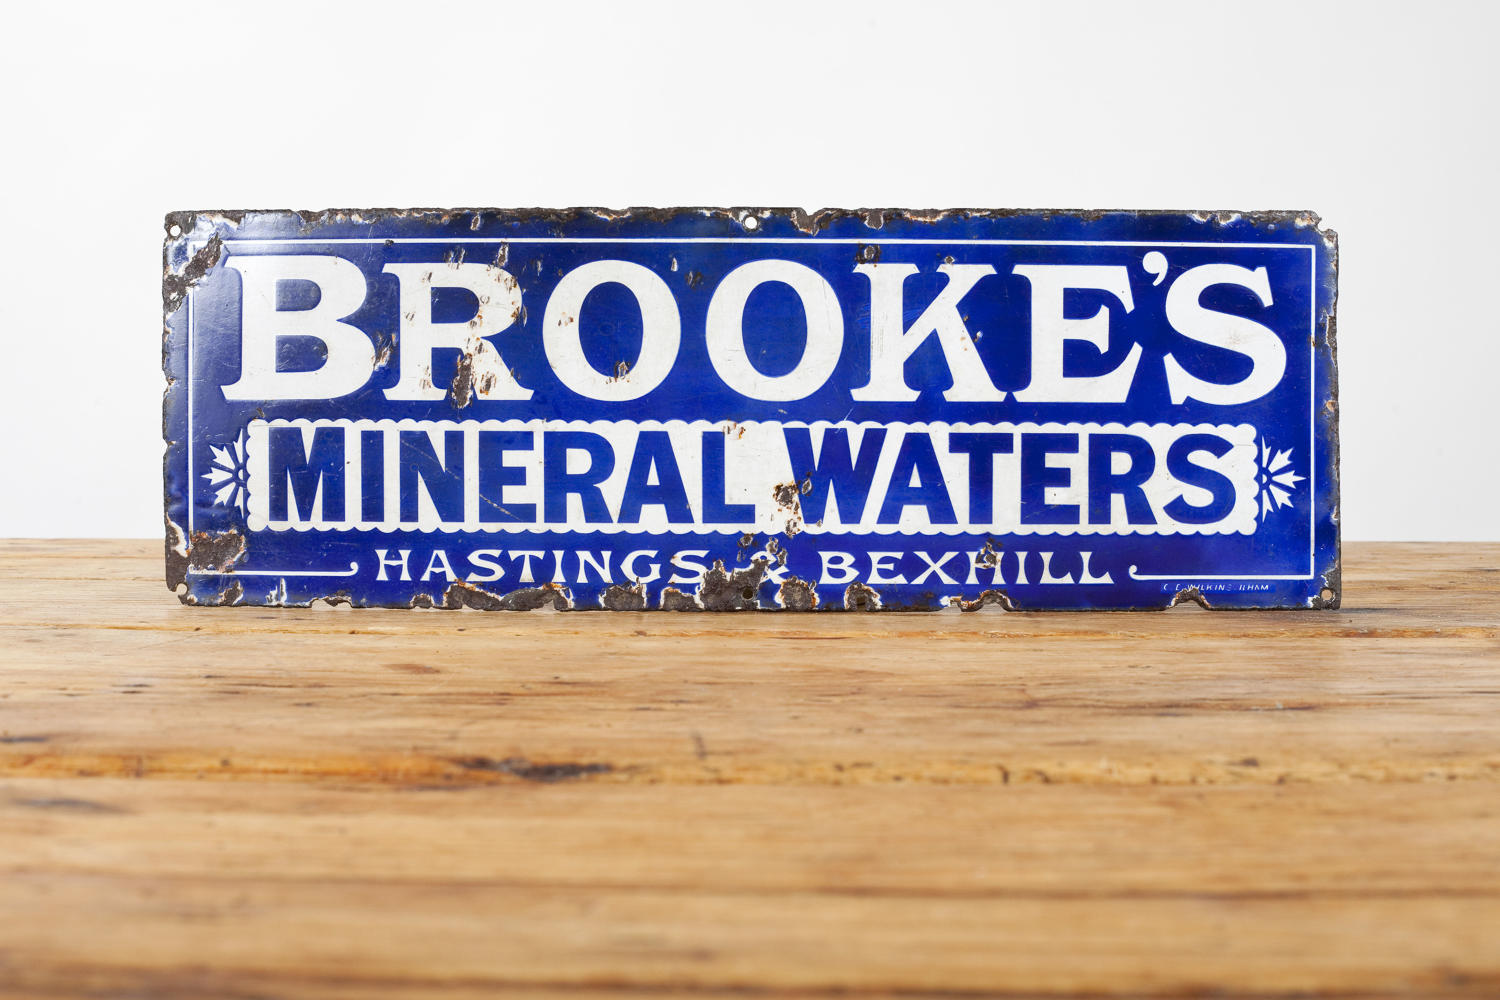 Brooke's Mineral Waters enamel sign